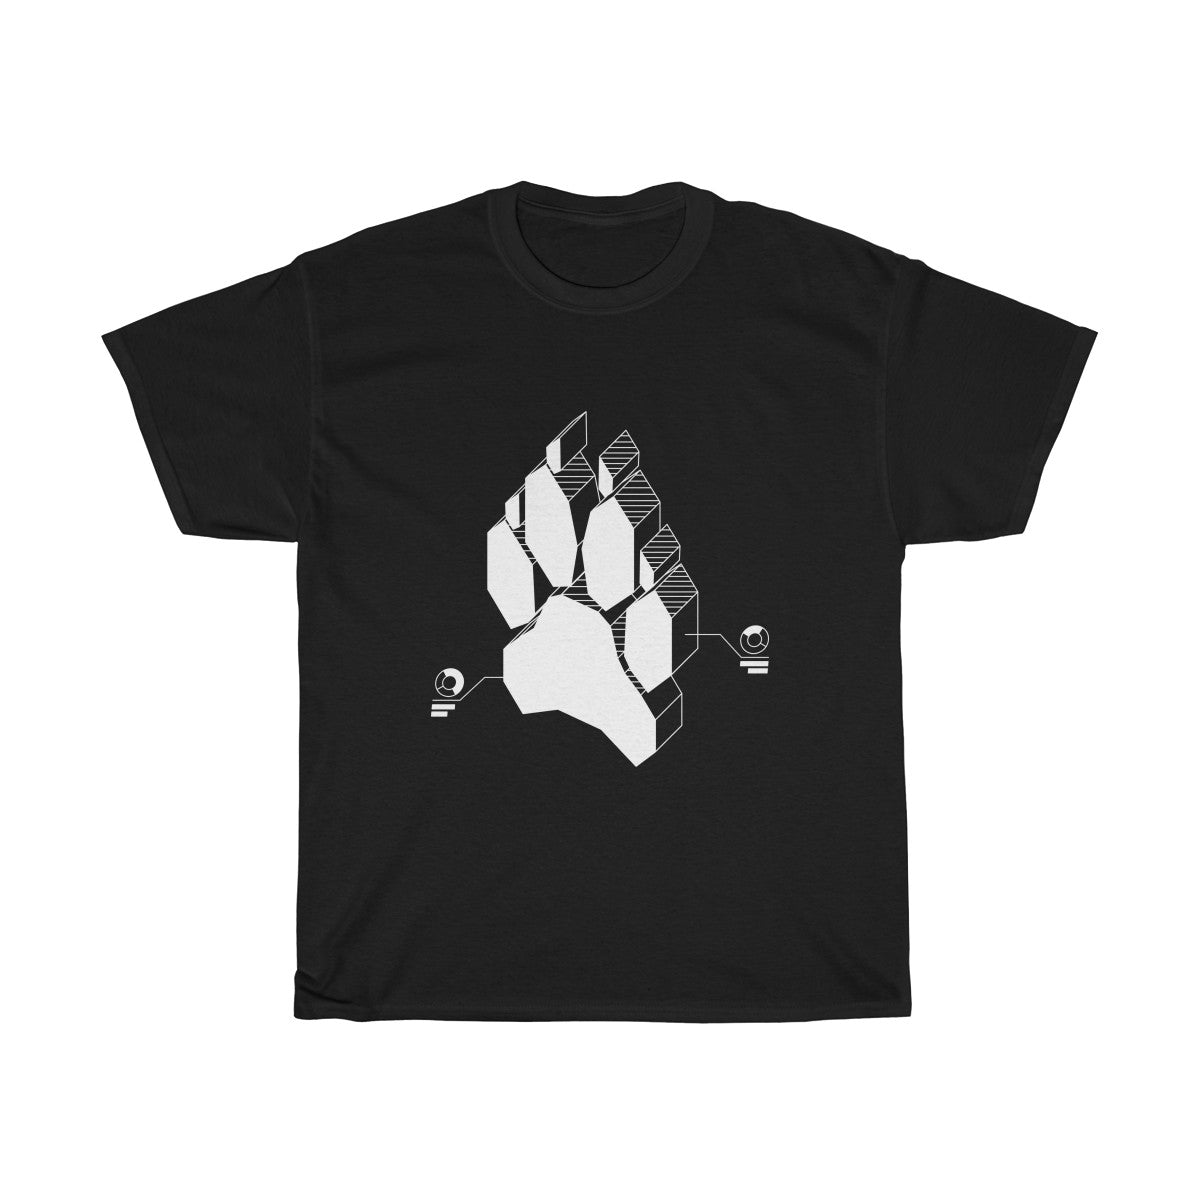 Techno Canine - T-Shirt T-Shirt Wexon Black S 